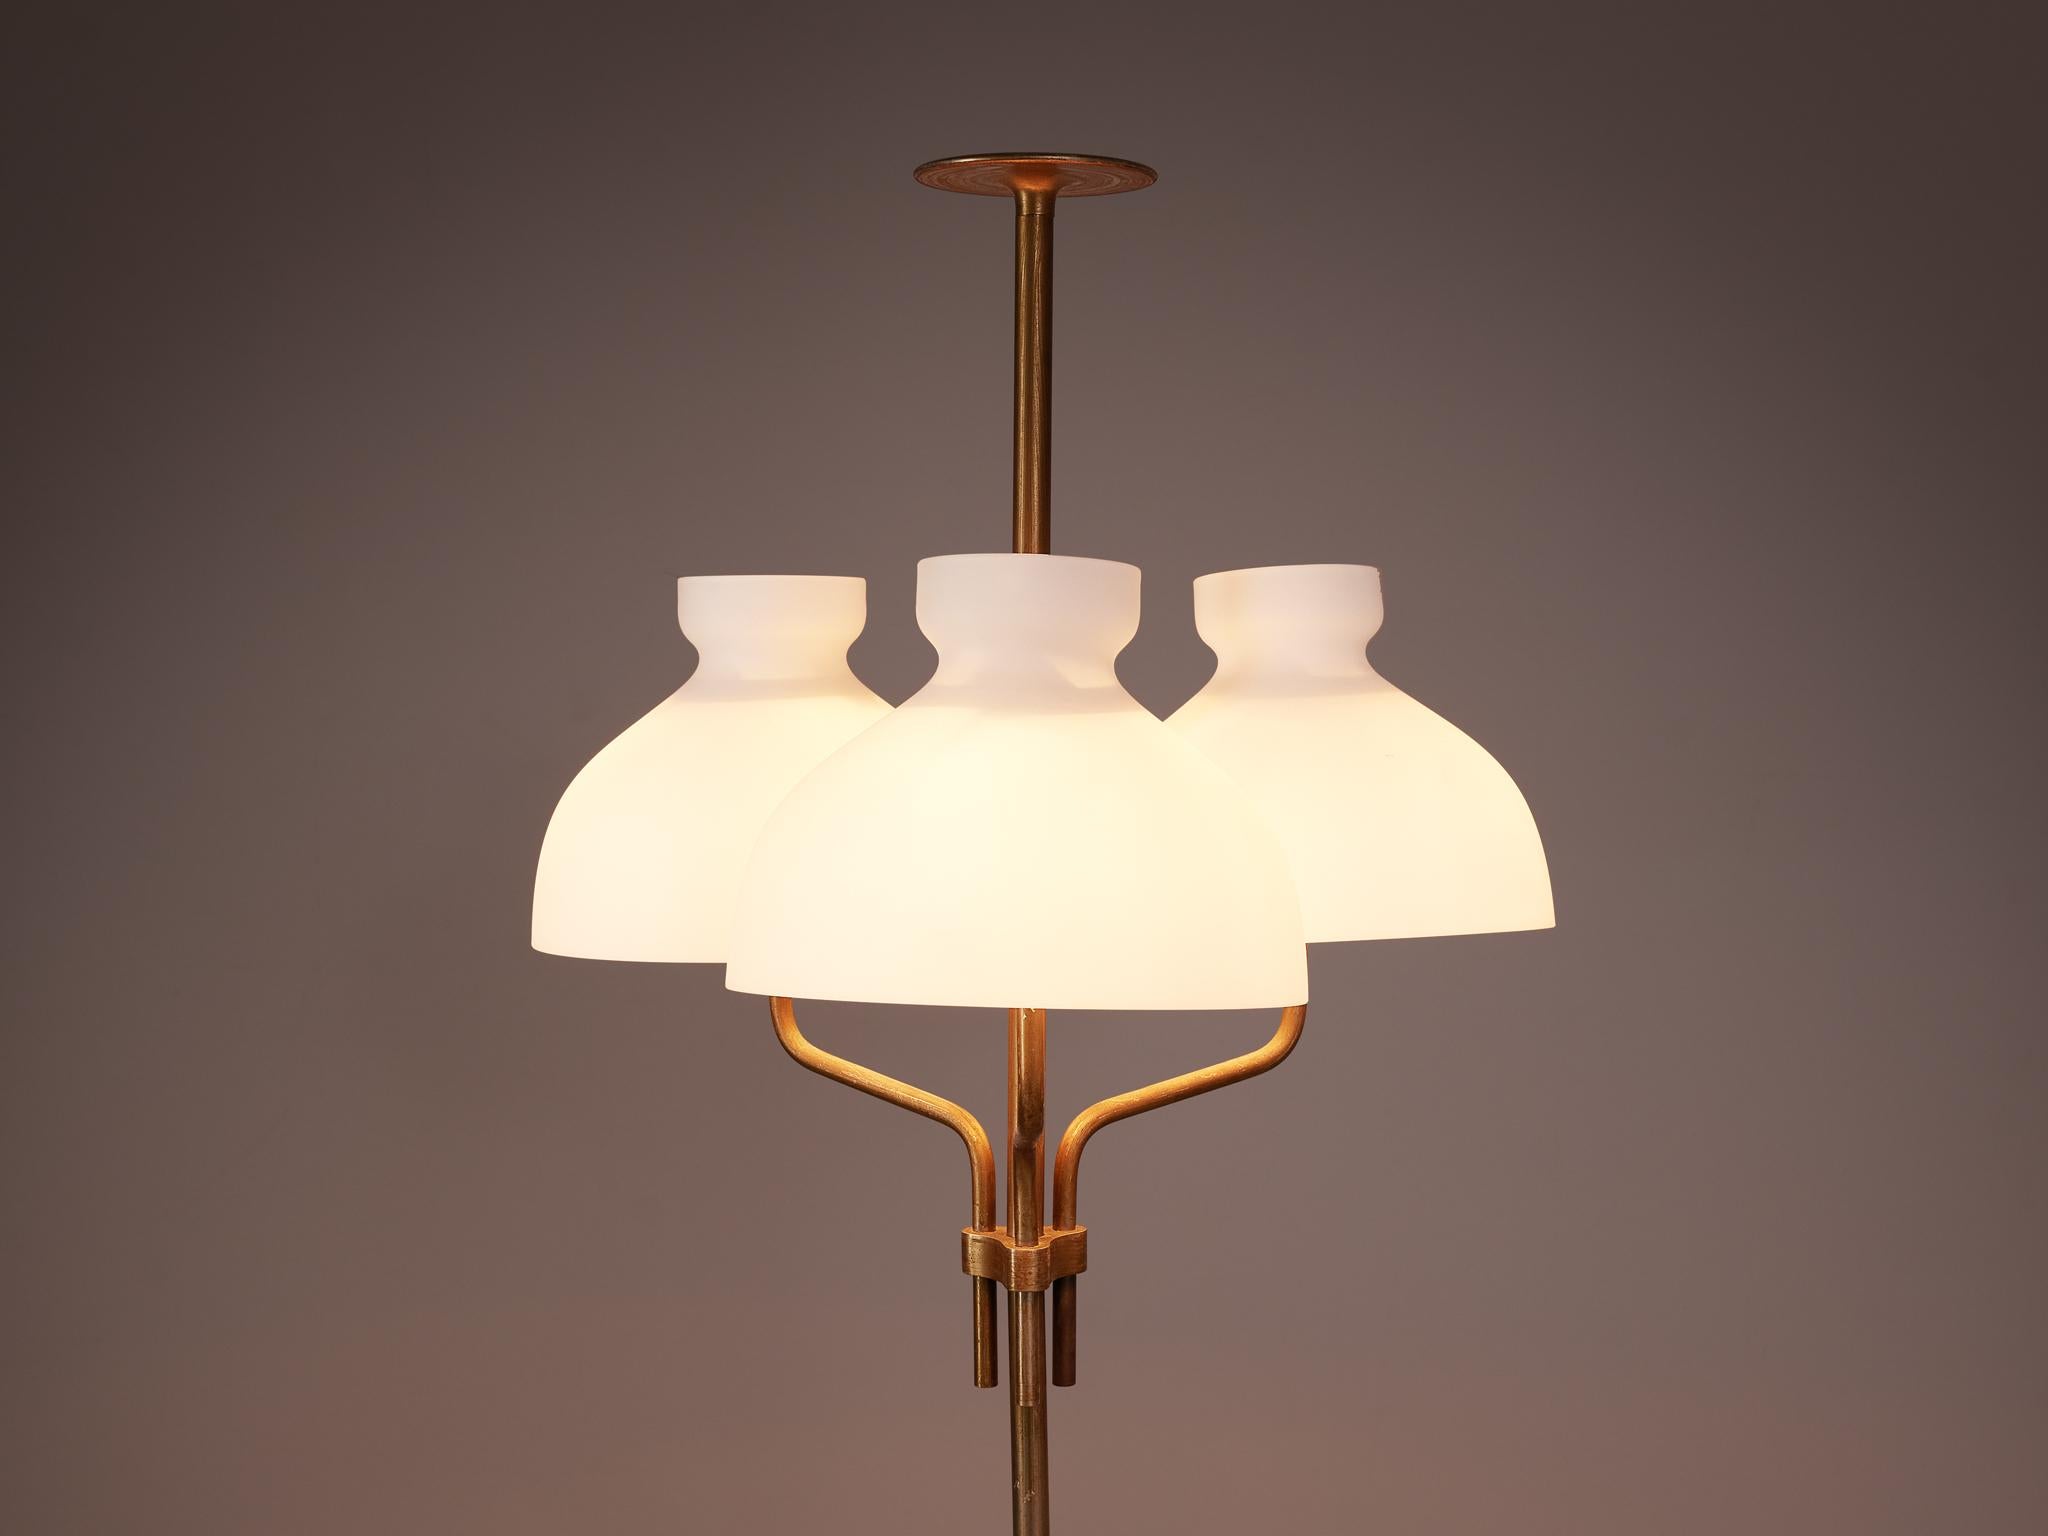 Carrara Marble Ignazio Gardella for Azucena 'Arenzano' Floor Lamp in Brass & Opaline Glass  For Sale